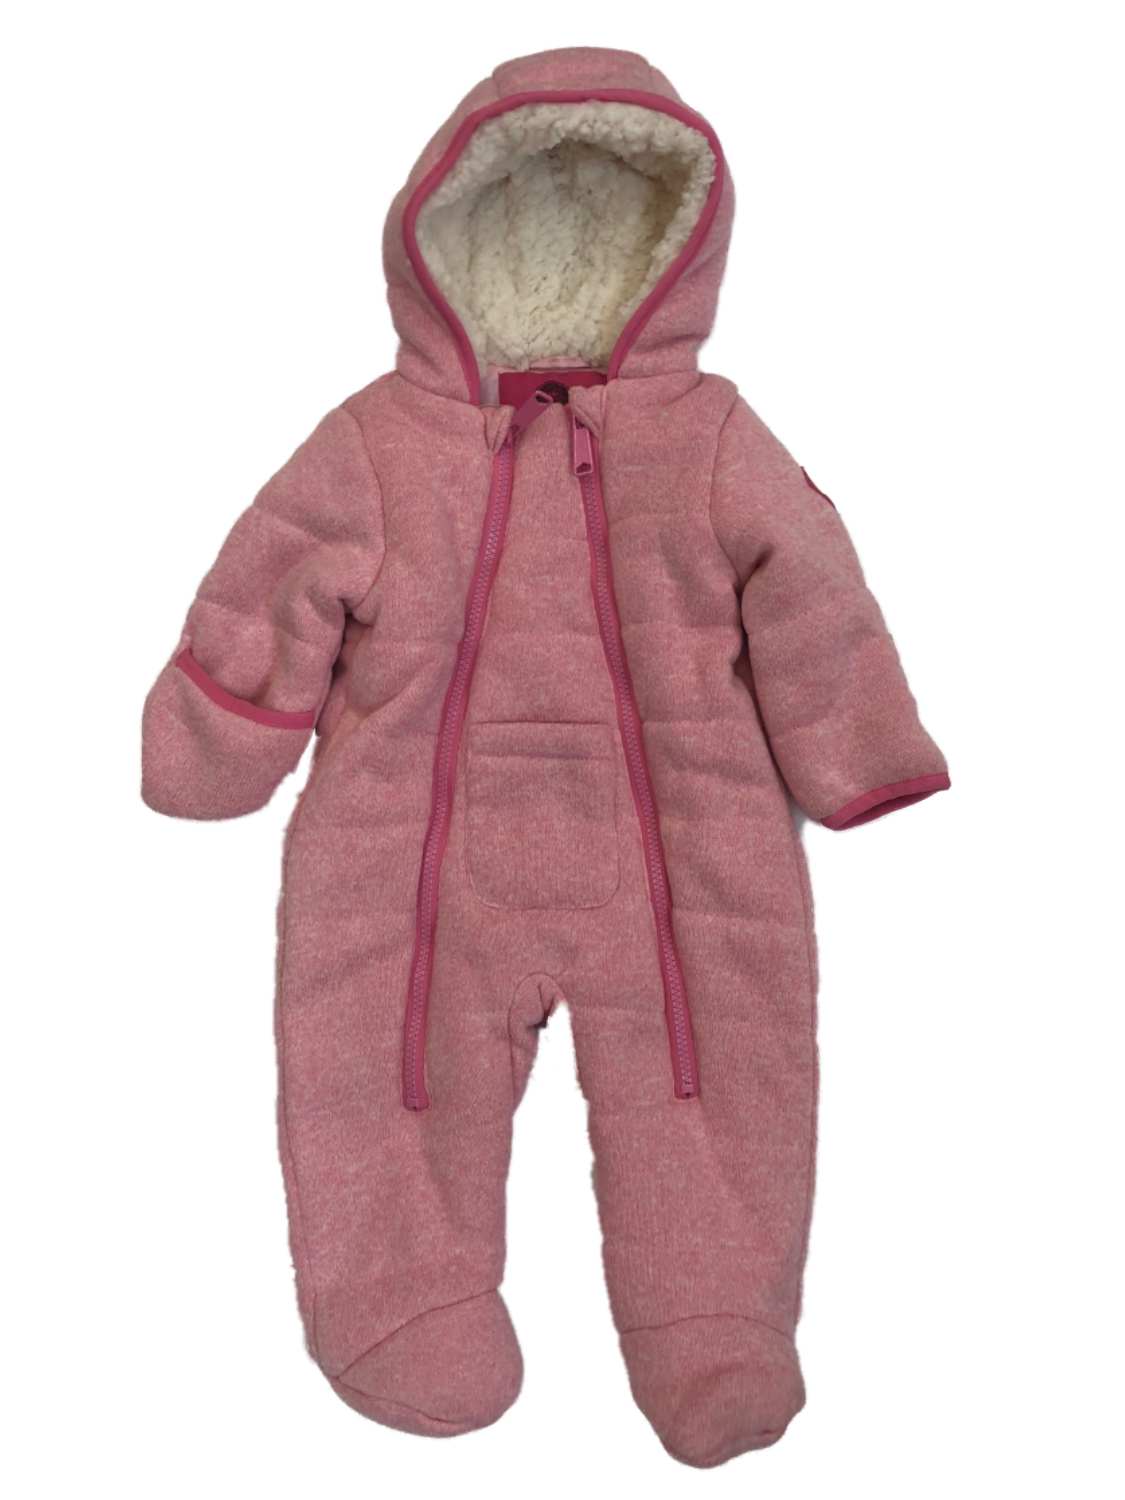 Weatherproof Infant Girls Pink Speckle Snowsuit Baby Pram Sherpa Snow Suit 6-9m